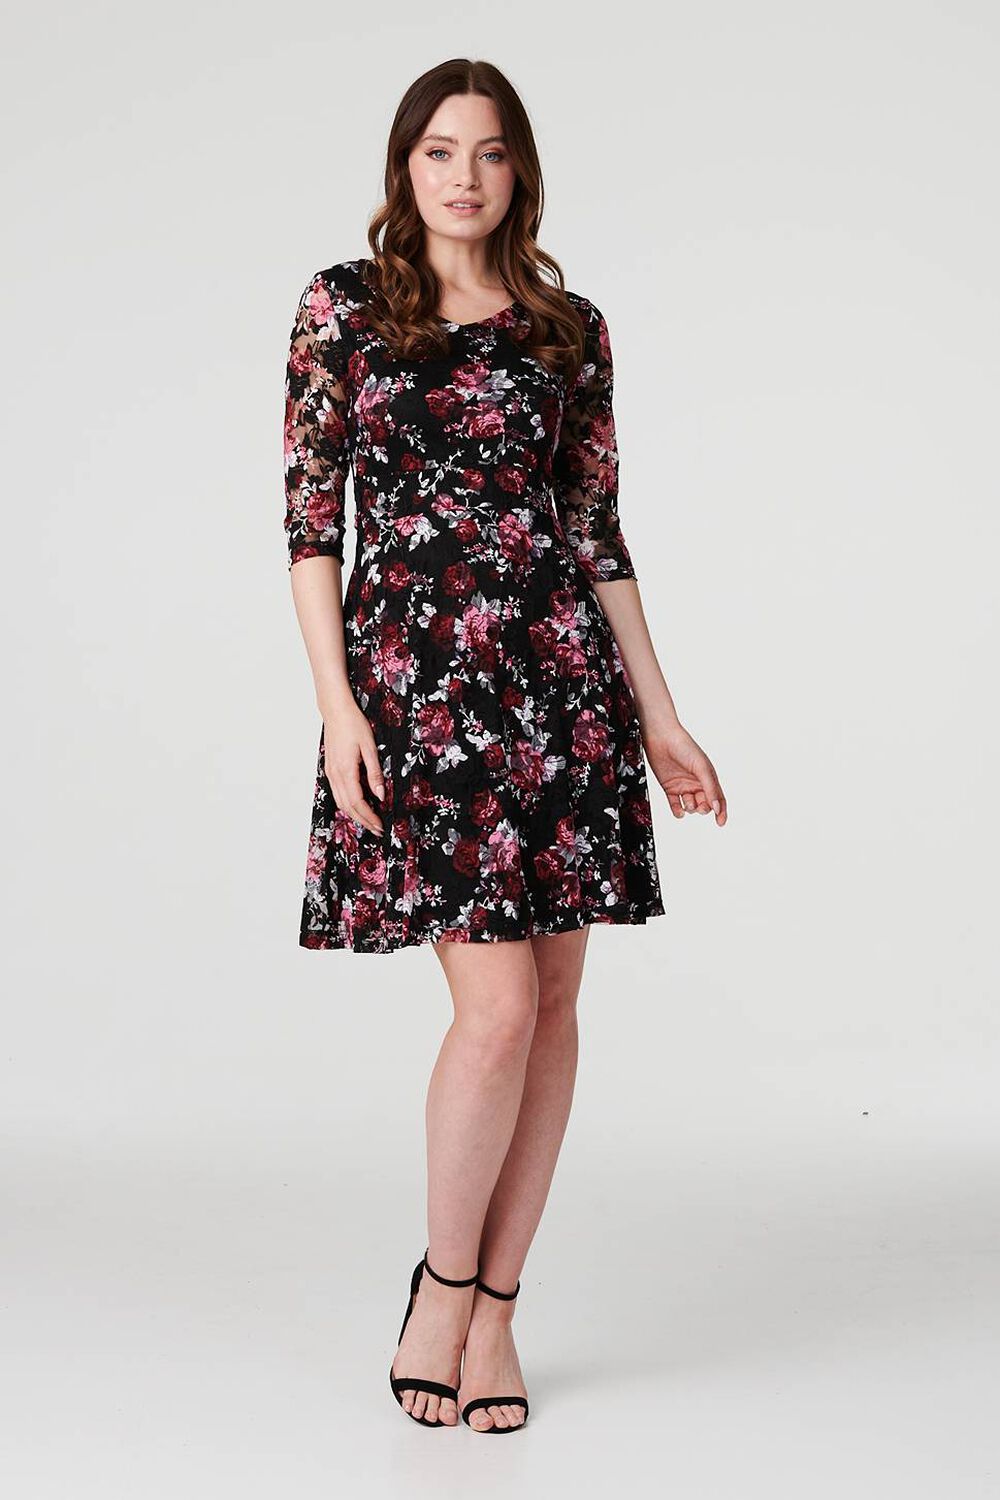 Izabel London Red - Rose Print Lace Overlay Short Dress, Size: 16